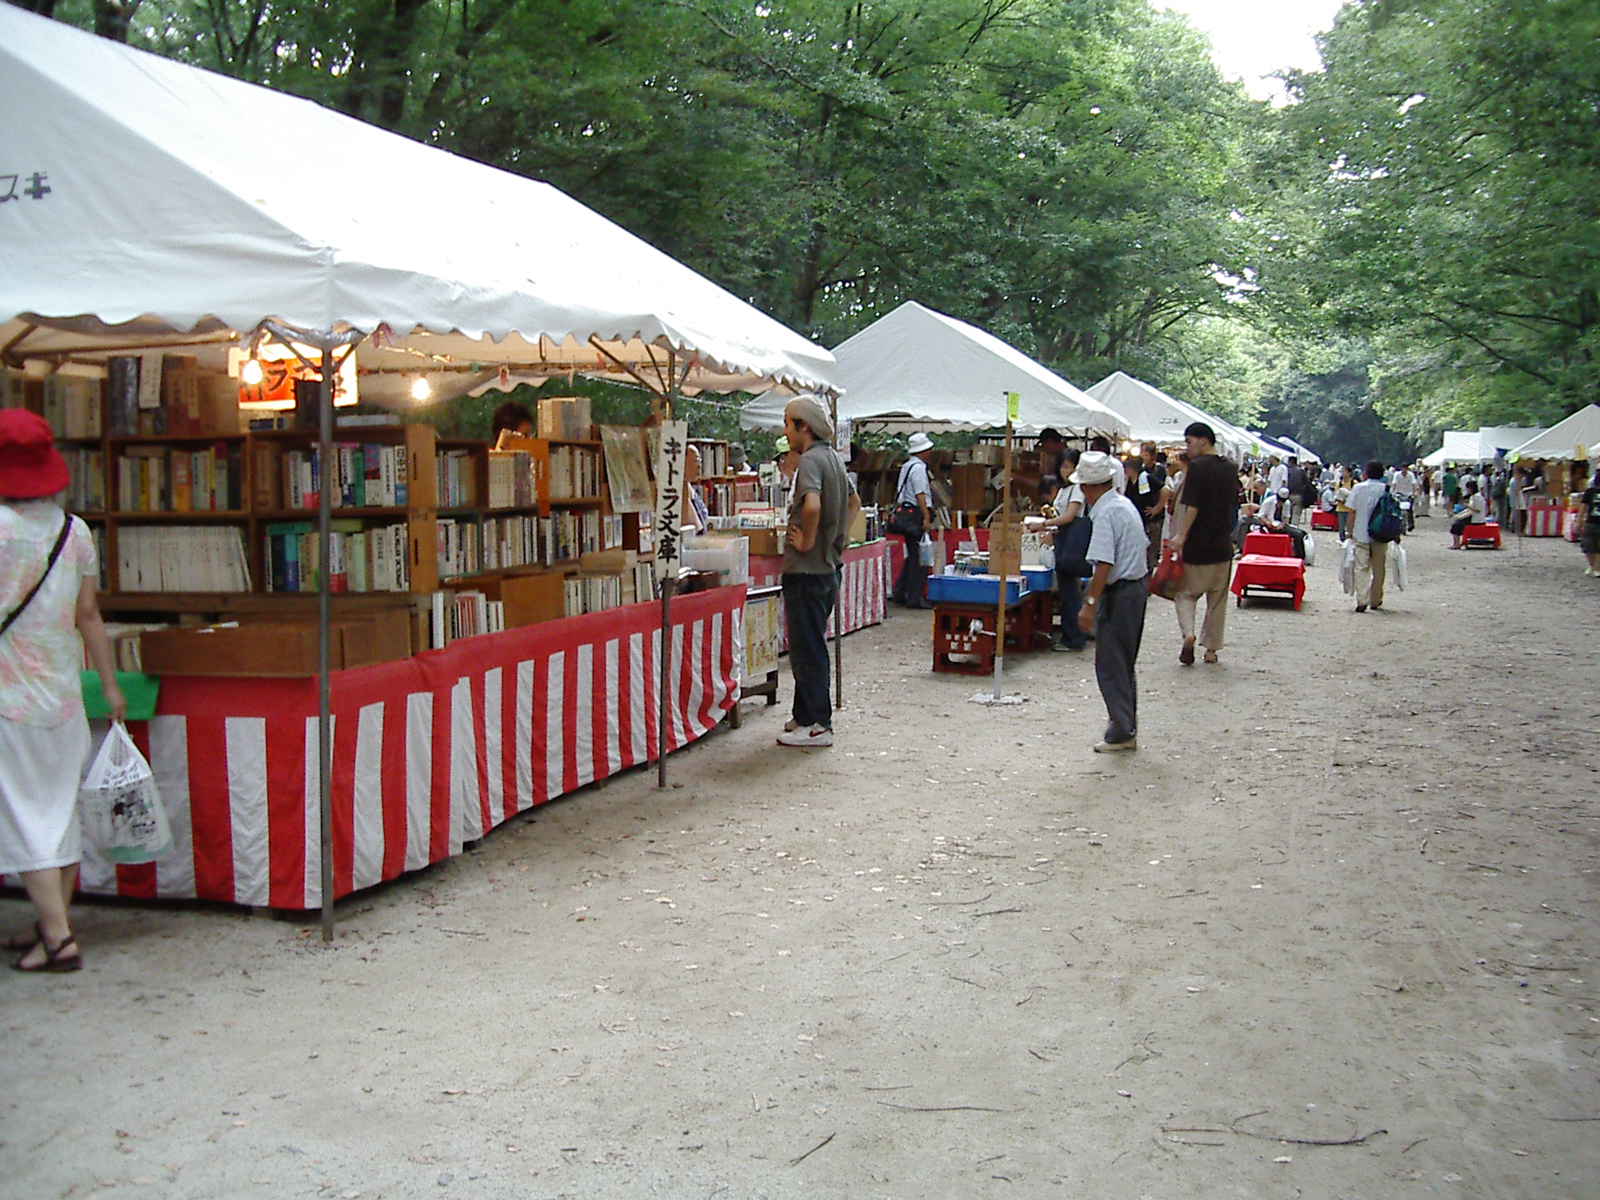 File:Kyoto shimogamo book market.jpg - Wikimedia Commons